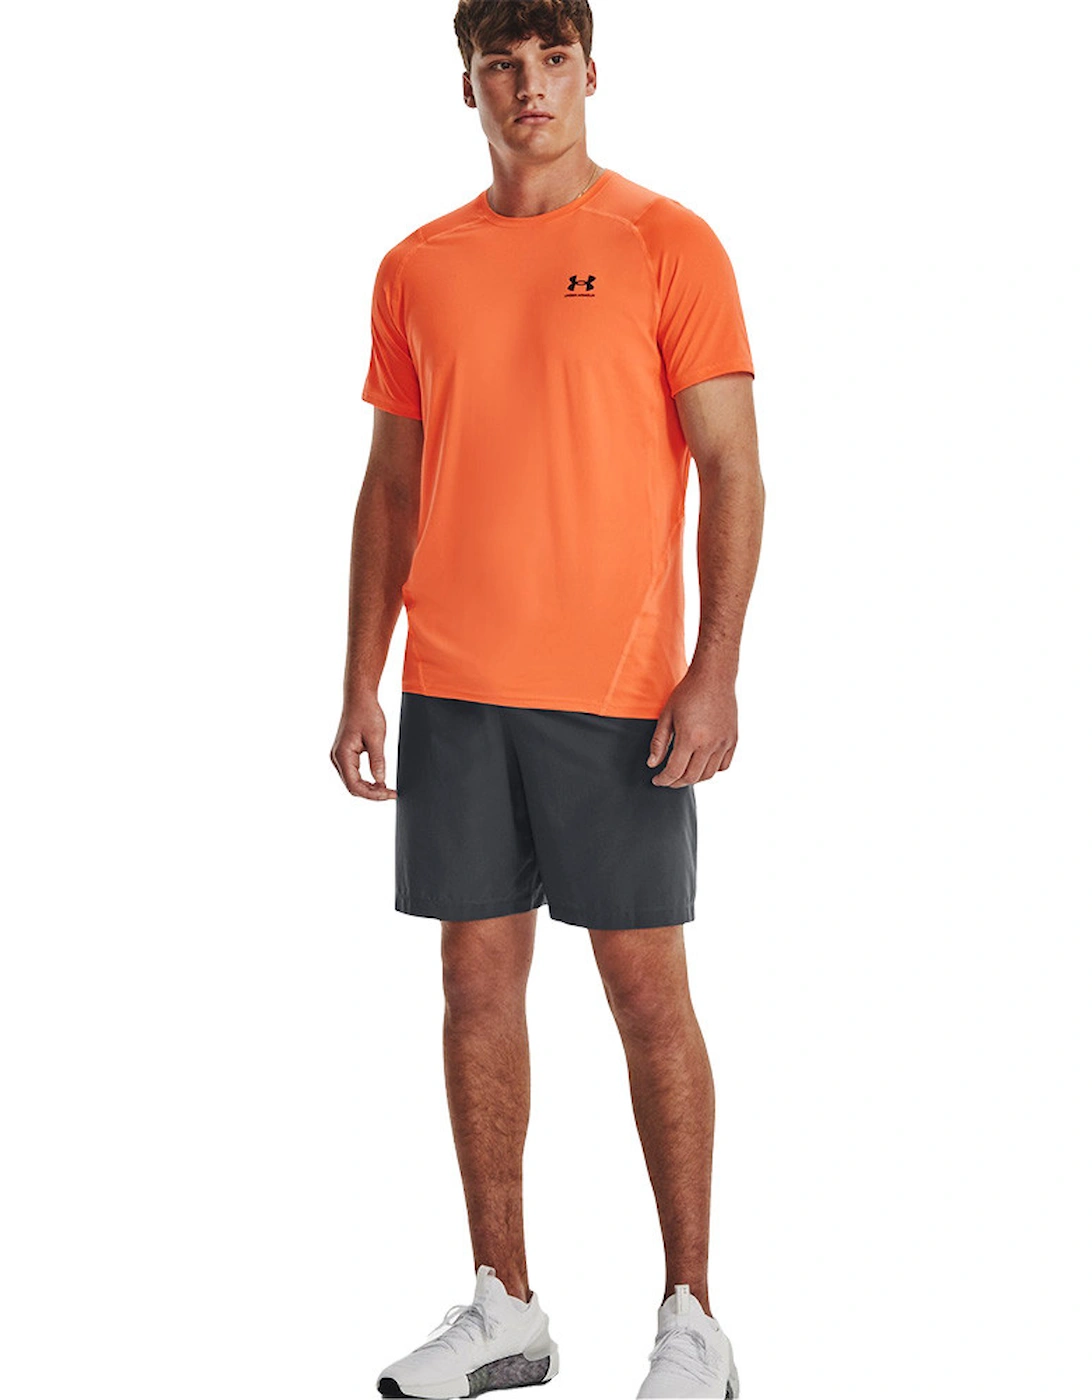 Mens Heat Gear Fitted T-Shirt (Orange)